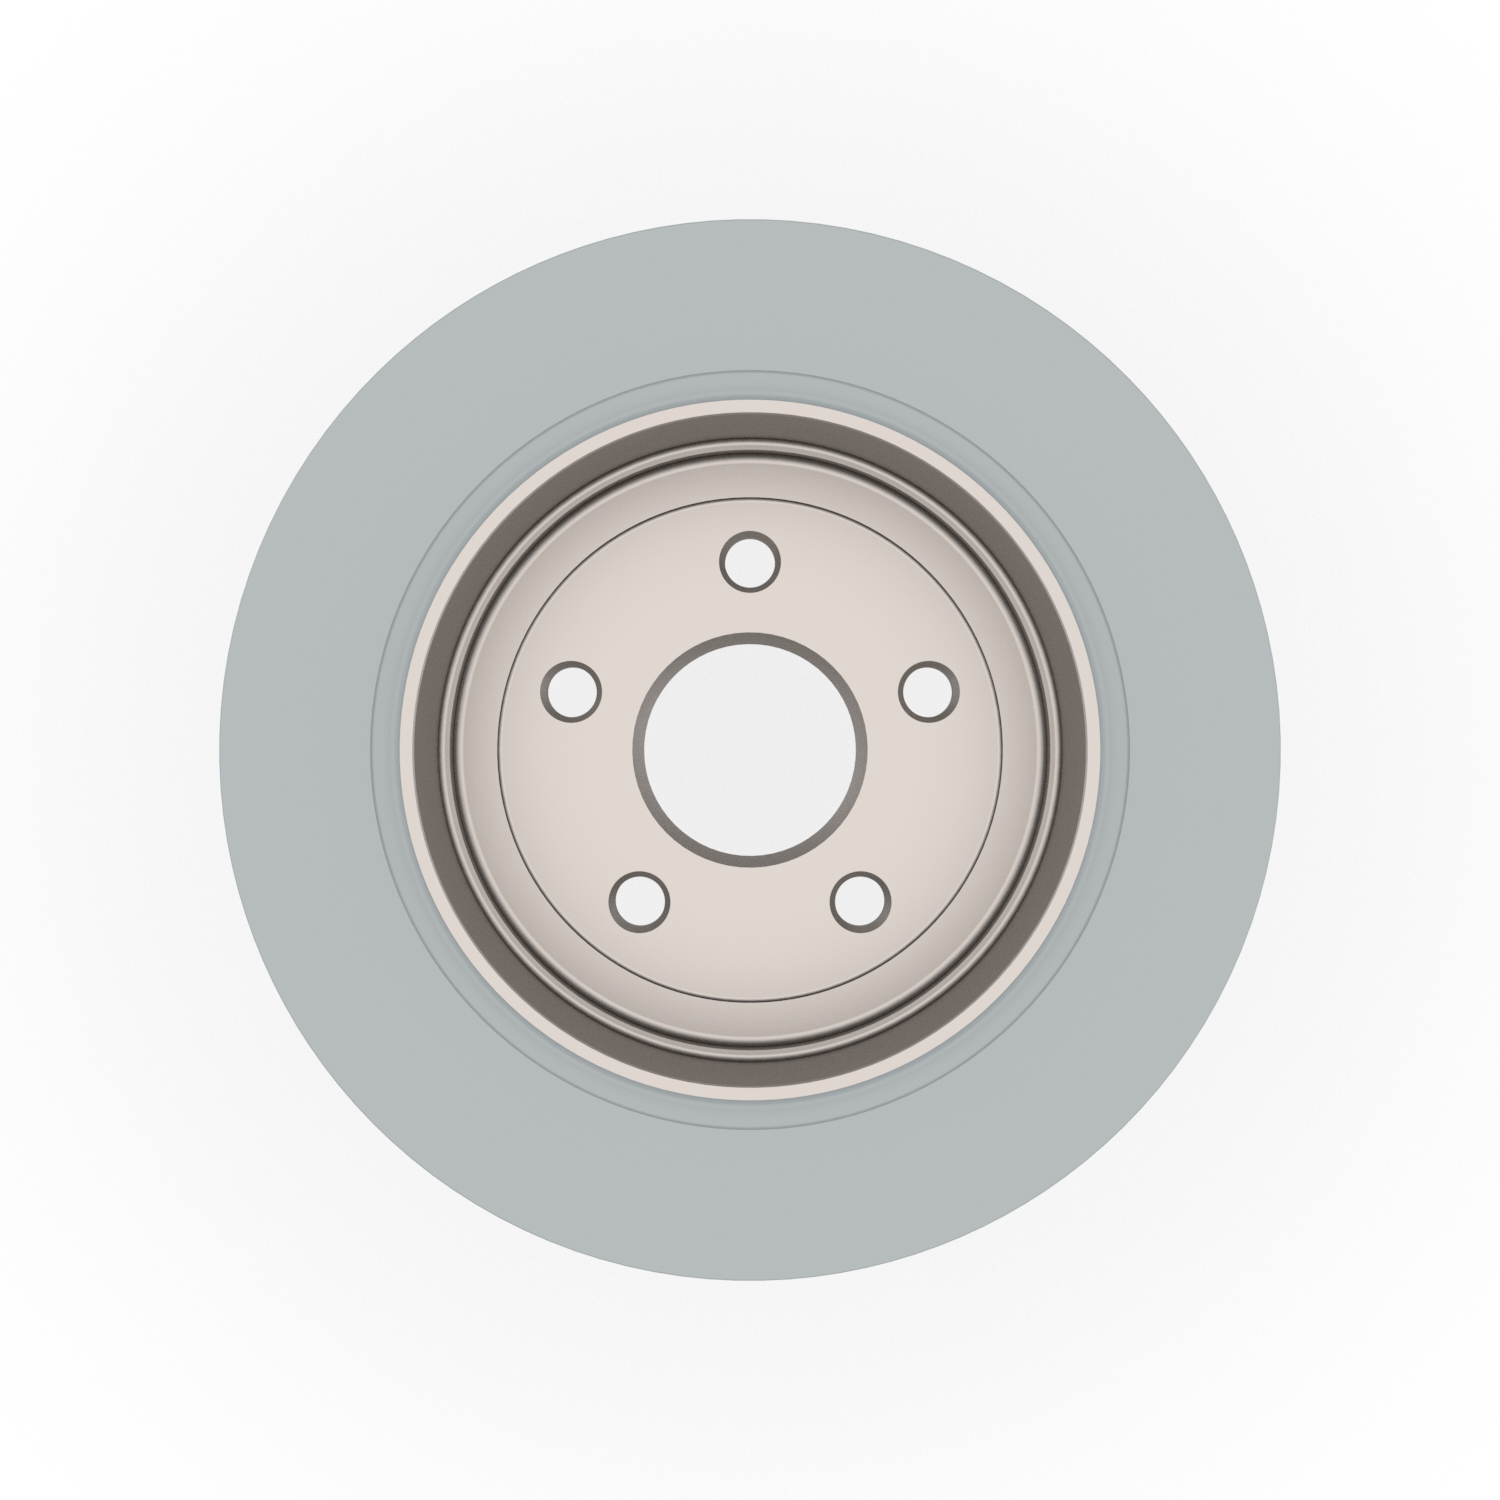 MOPAR PARTS - Disc Brake Rotor - MOP 68035022AE